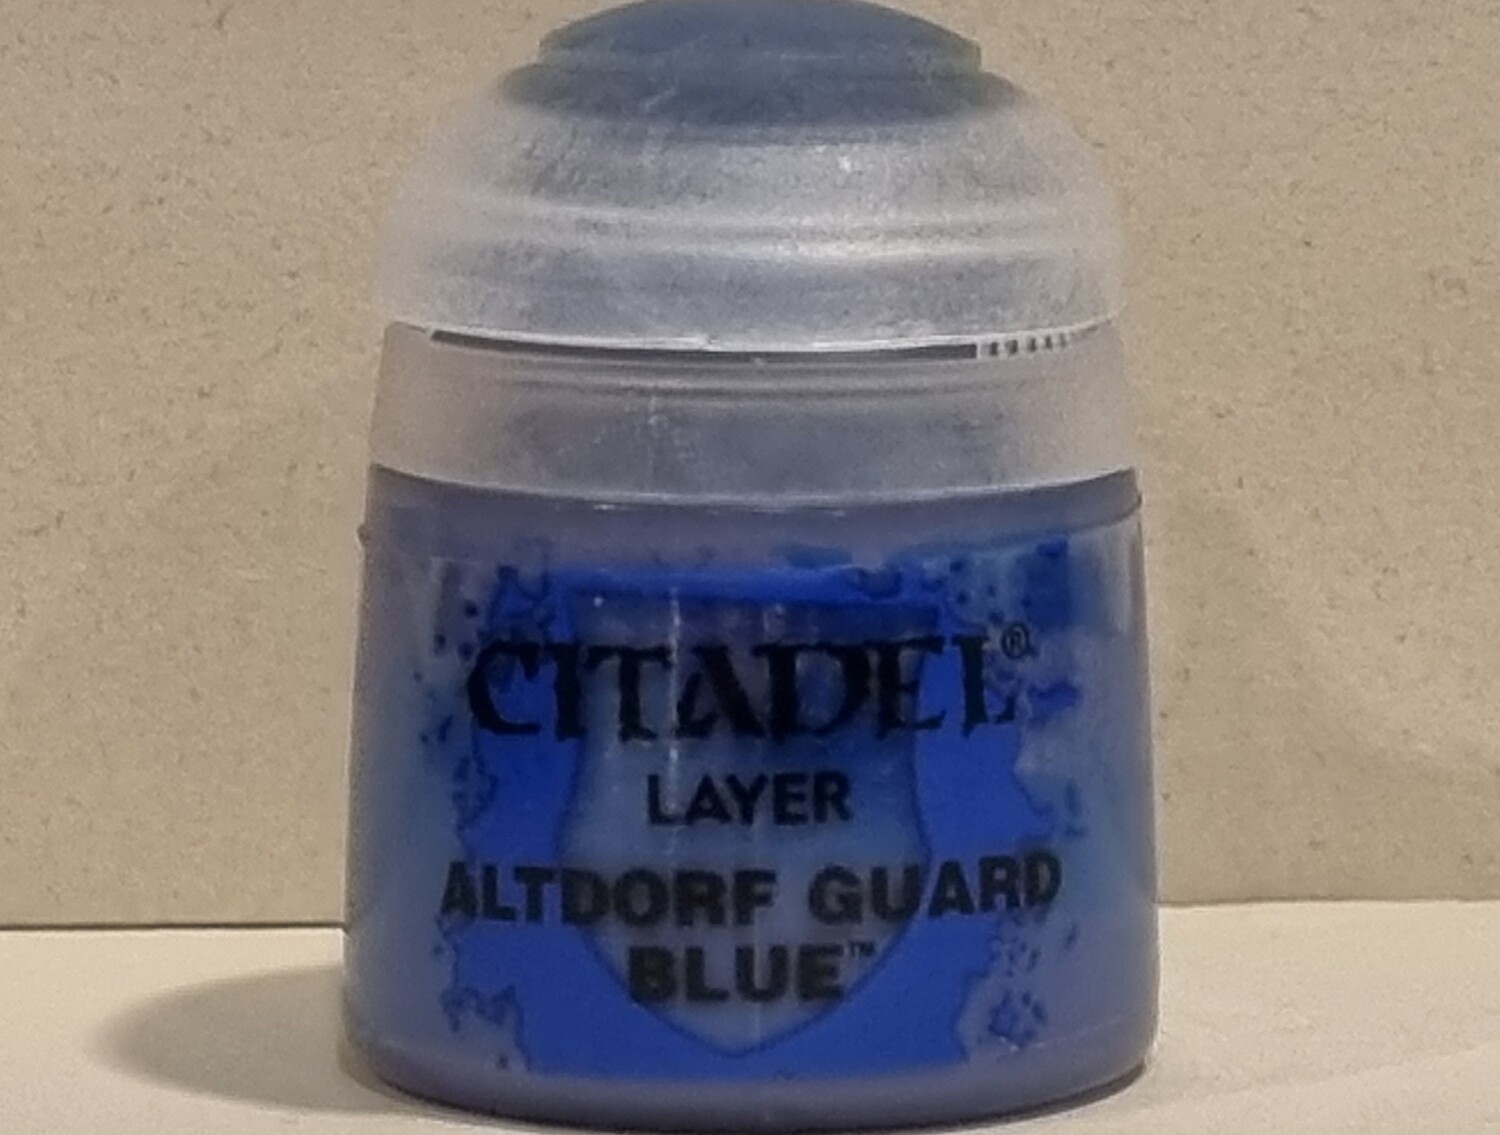 Citadel Paint, Layer, Altdorf Guard Blue, 12ml